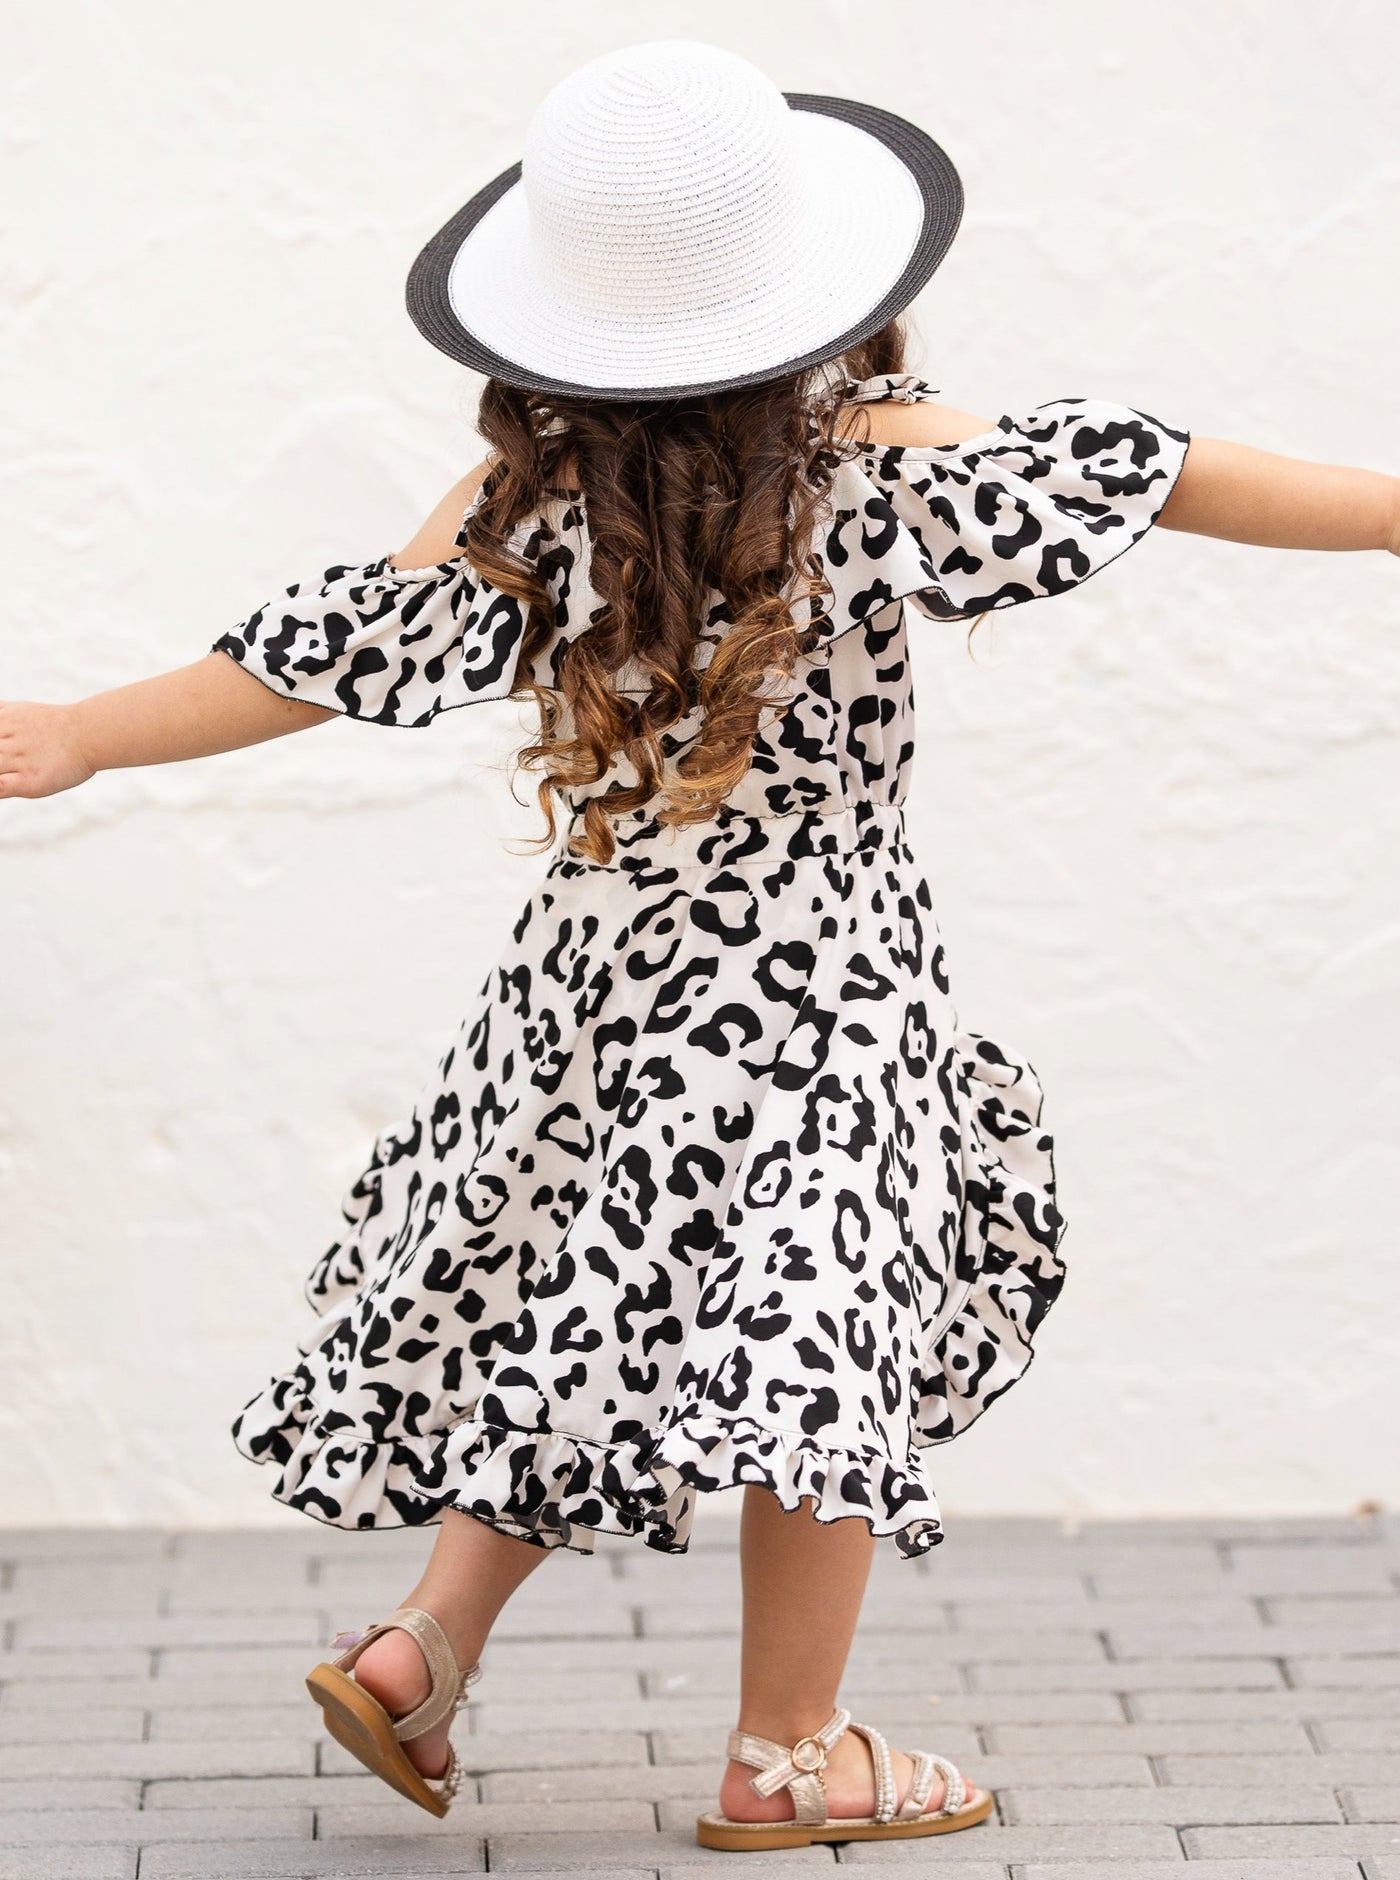 Mia Belle Girls Leopard Print Romper Dress | Girls Spring Outfits